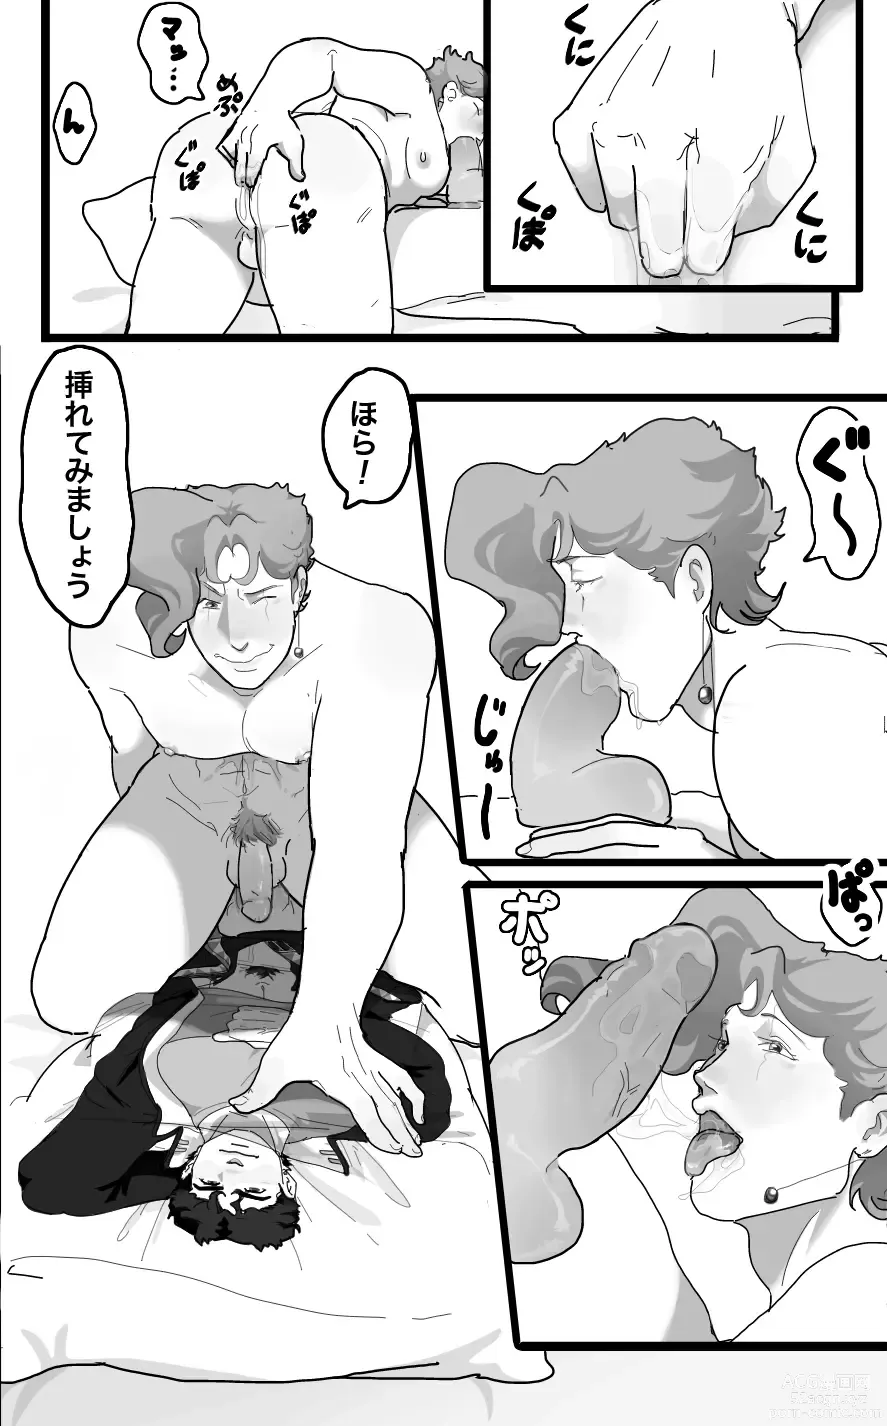 Page 6 of doujinshi Secret Pillow